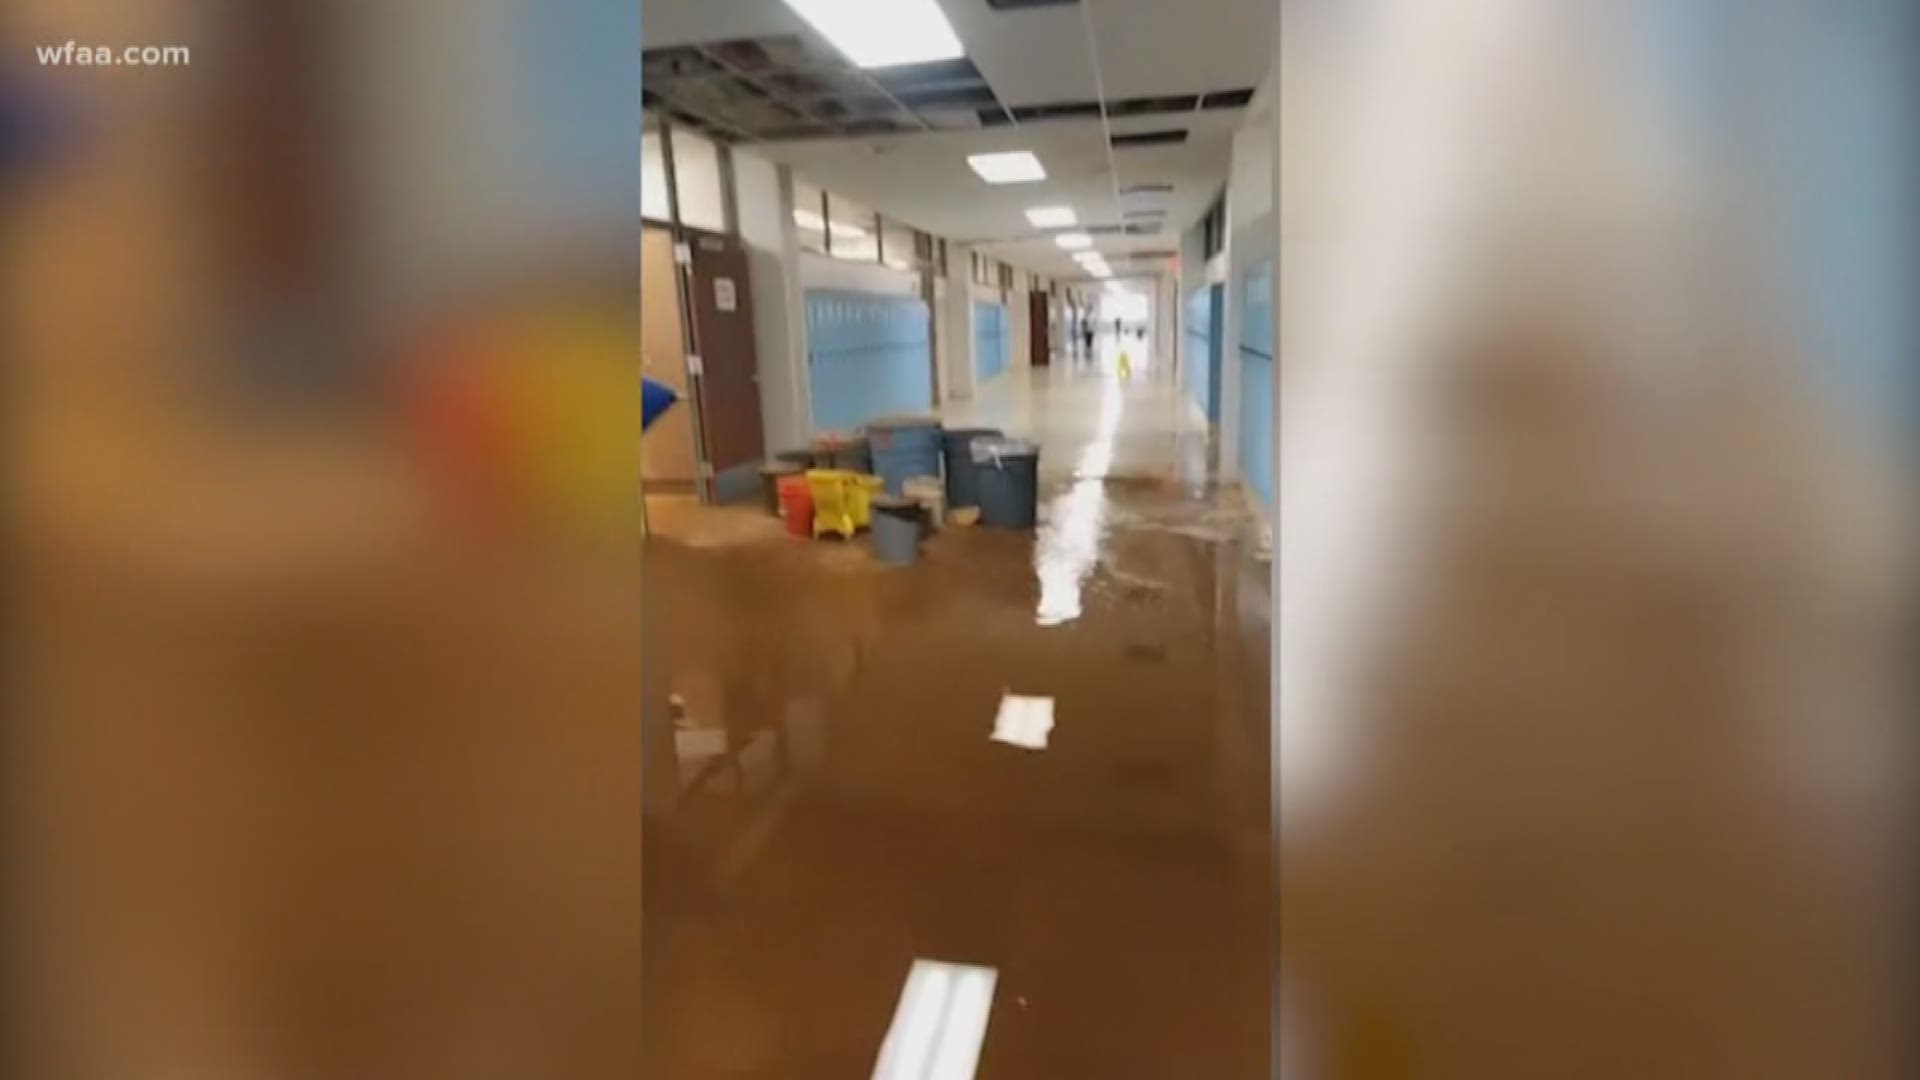 Rain leaks through Dallas school roof